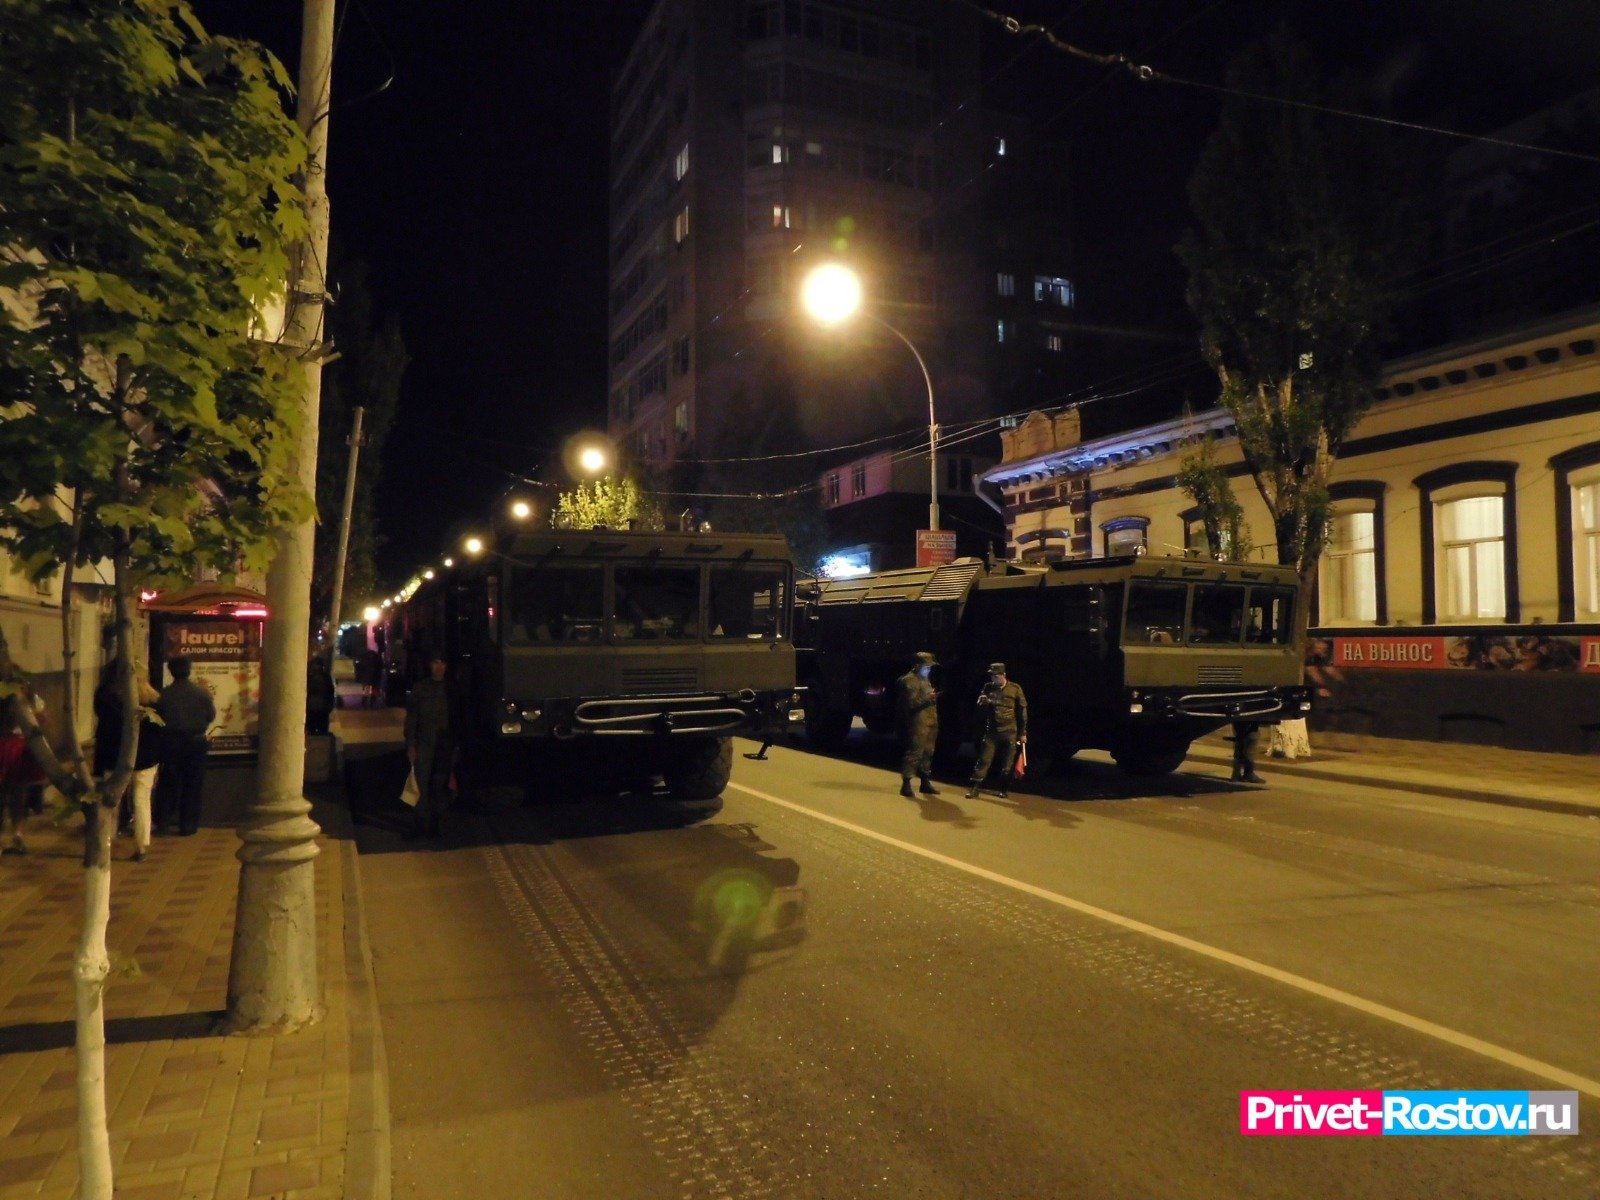 Тяжелая военная техника замечена на улицах в Ростове-на-Дону